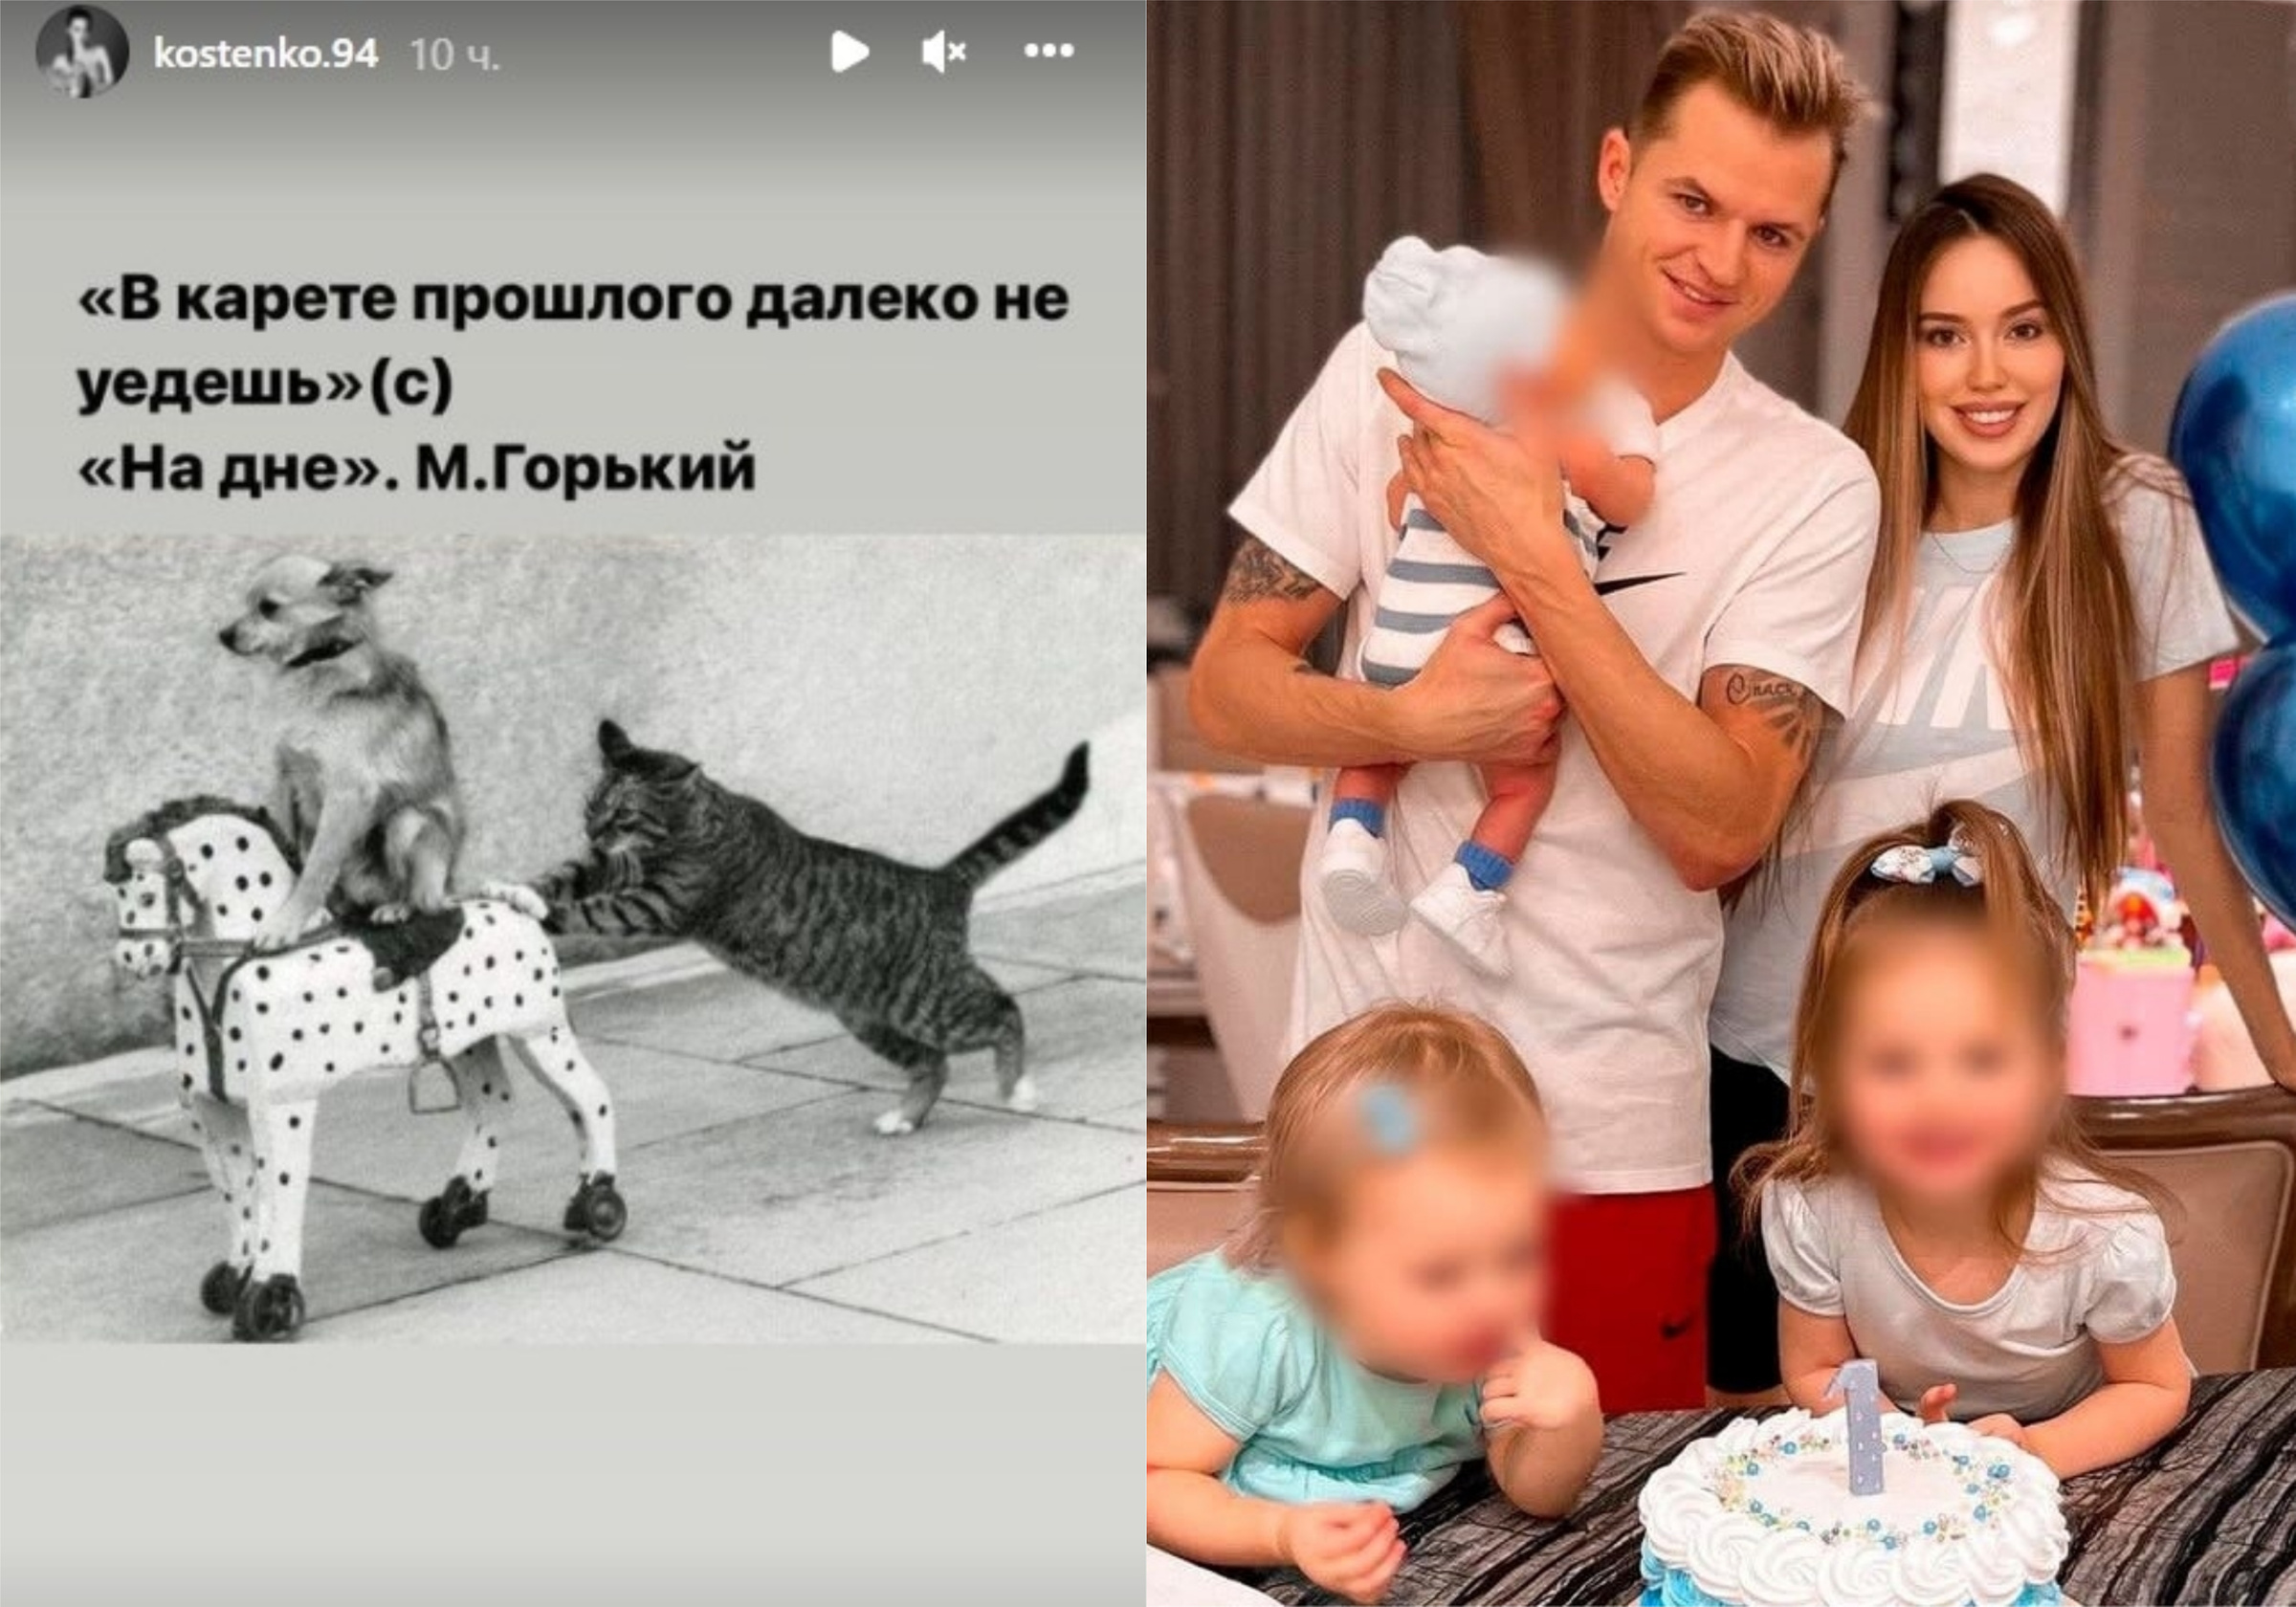 Дмитрий Тарасов и Анастасия Костенко с детьми. Фото © Instagram / kostenko.94 и kostenko.94